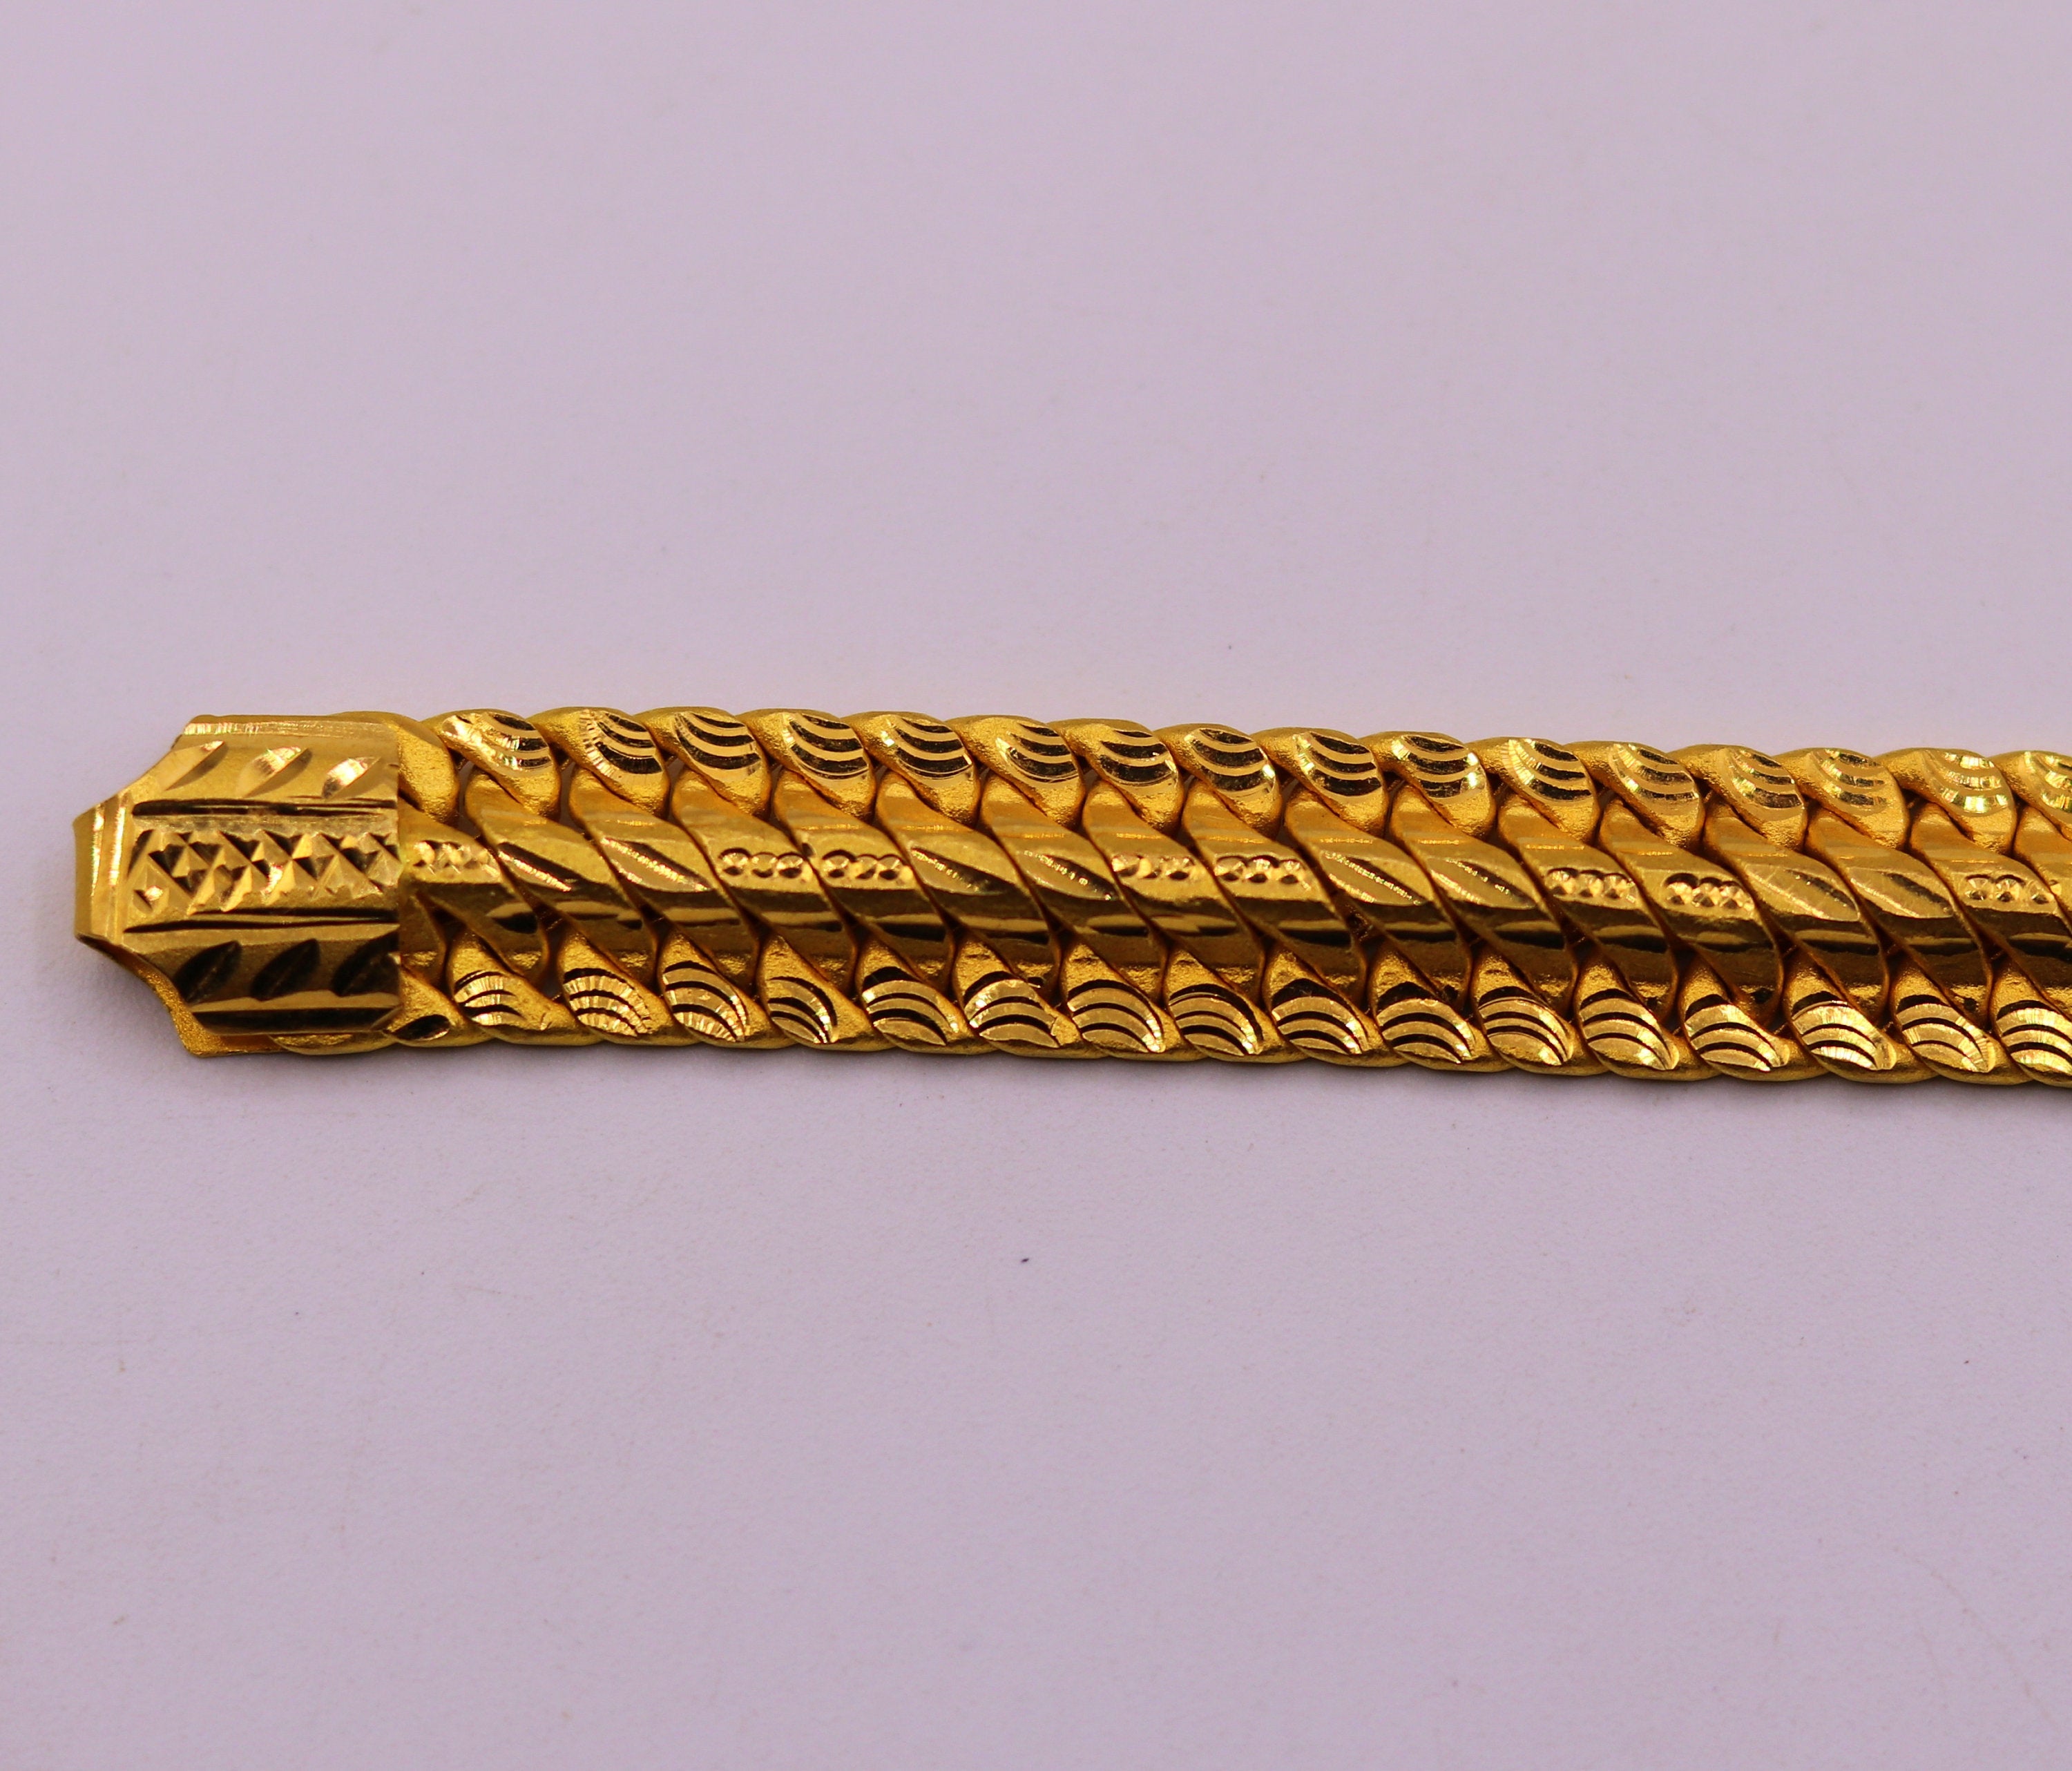 Amazon.co.jp: Speranza K18 18K Gold Kihei Bracelet, 8 Sided Triple Bracelet,  0.4 oz (10 g), 7.9 inches (20 cm), Gold Chain with Mint Certification Mark,  K18 18K Gold gold : Clothing, Shoes & Jewelry